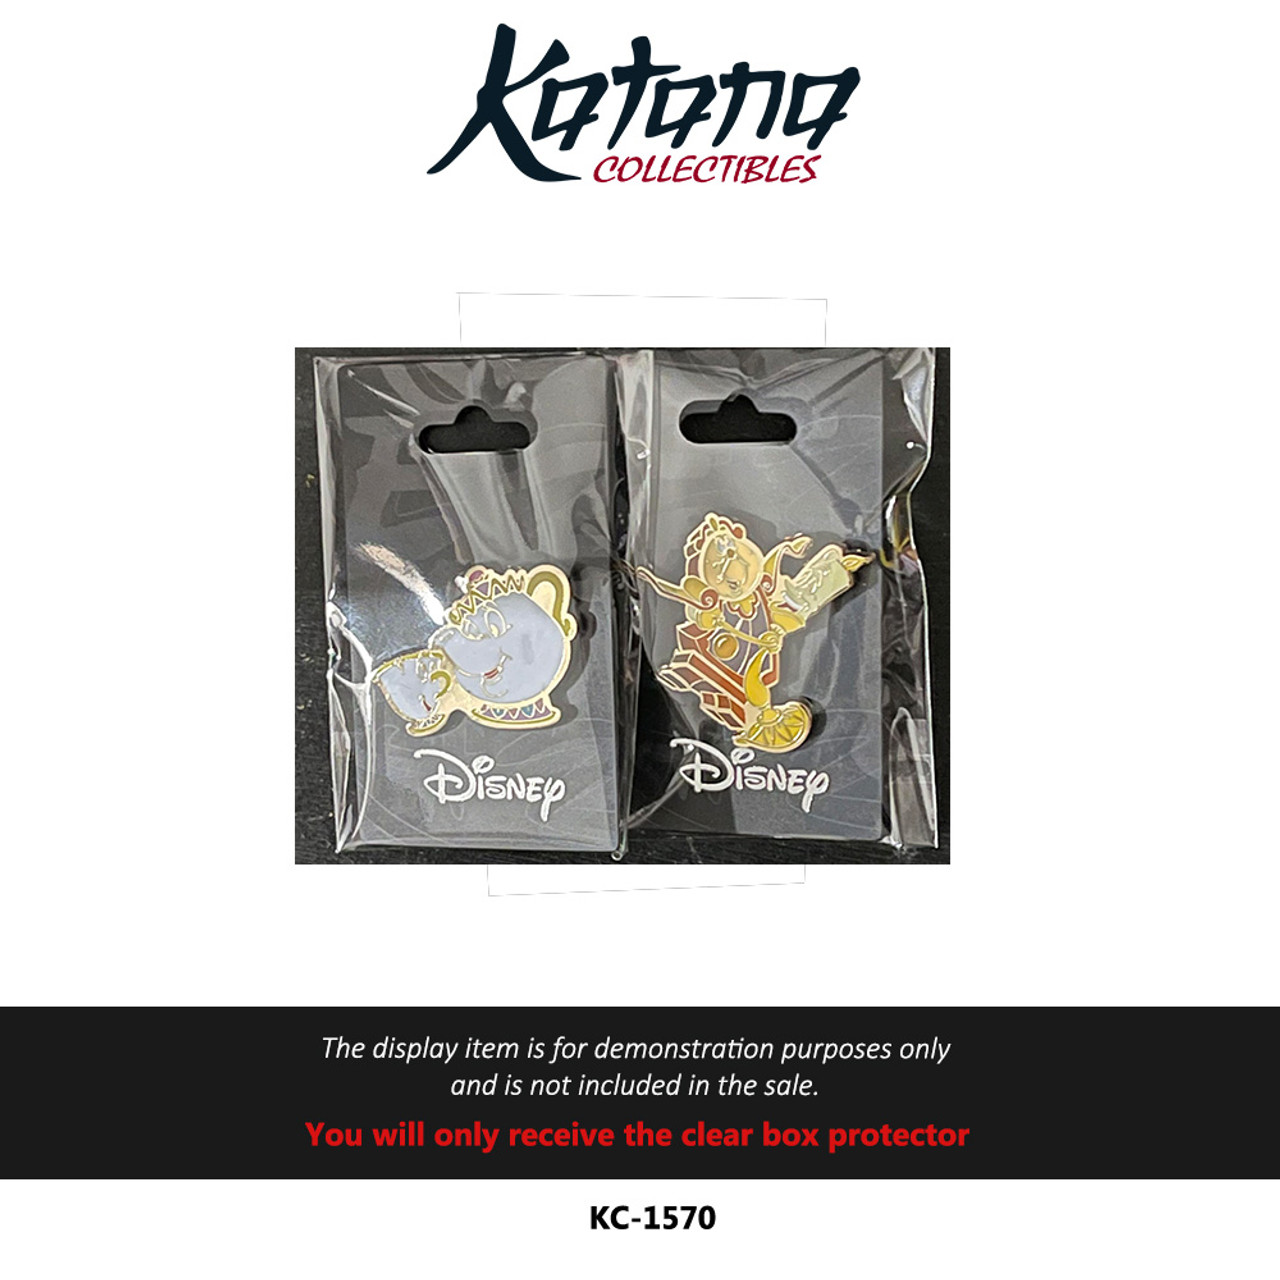 Katana Collectibles Protector For Disney Princess pin Standard Size